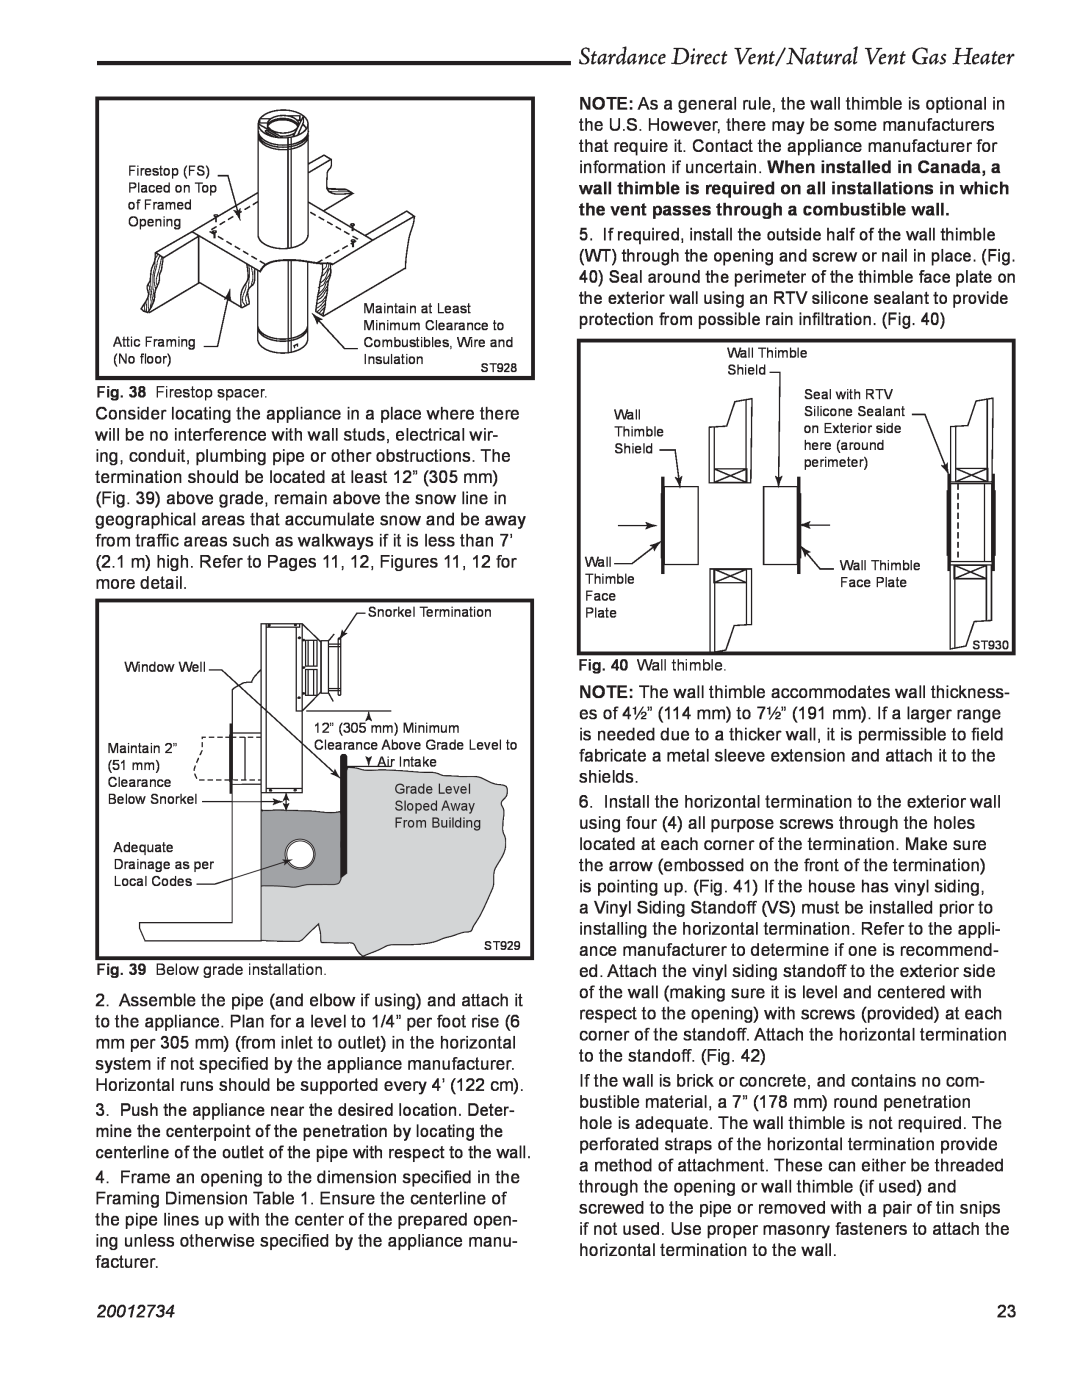 Vermont Casting manual Stardance Direct Vent/Natural Vent Gas Heater, 20012734, Firestop spacer, Below grade installation 